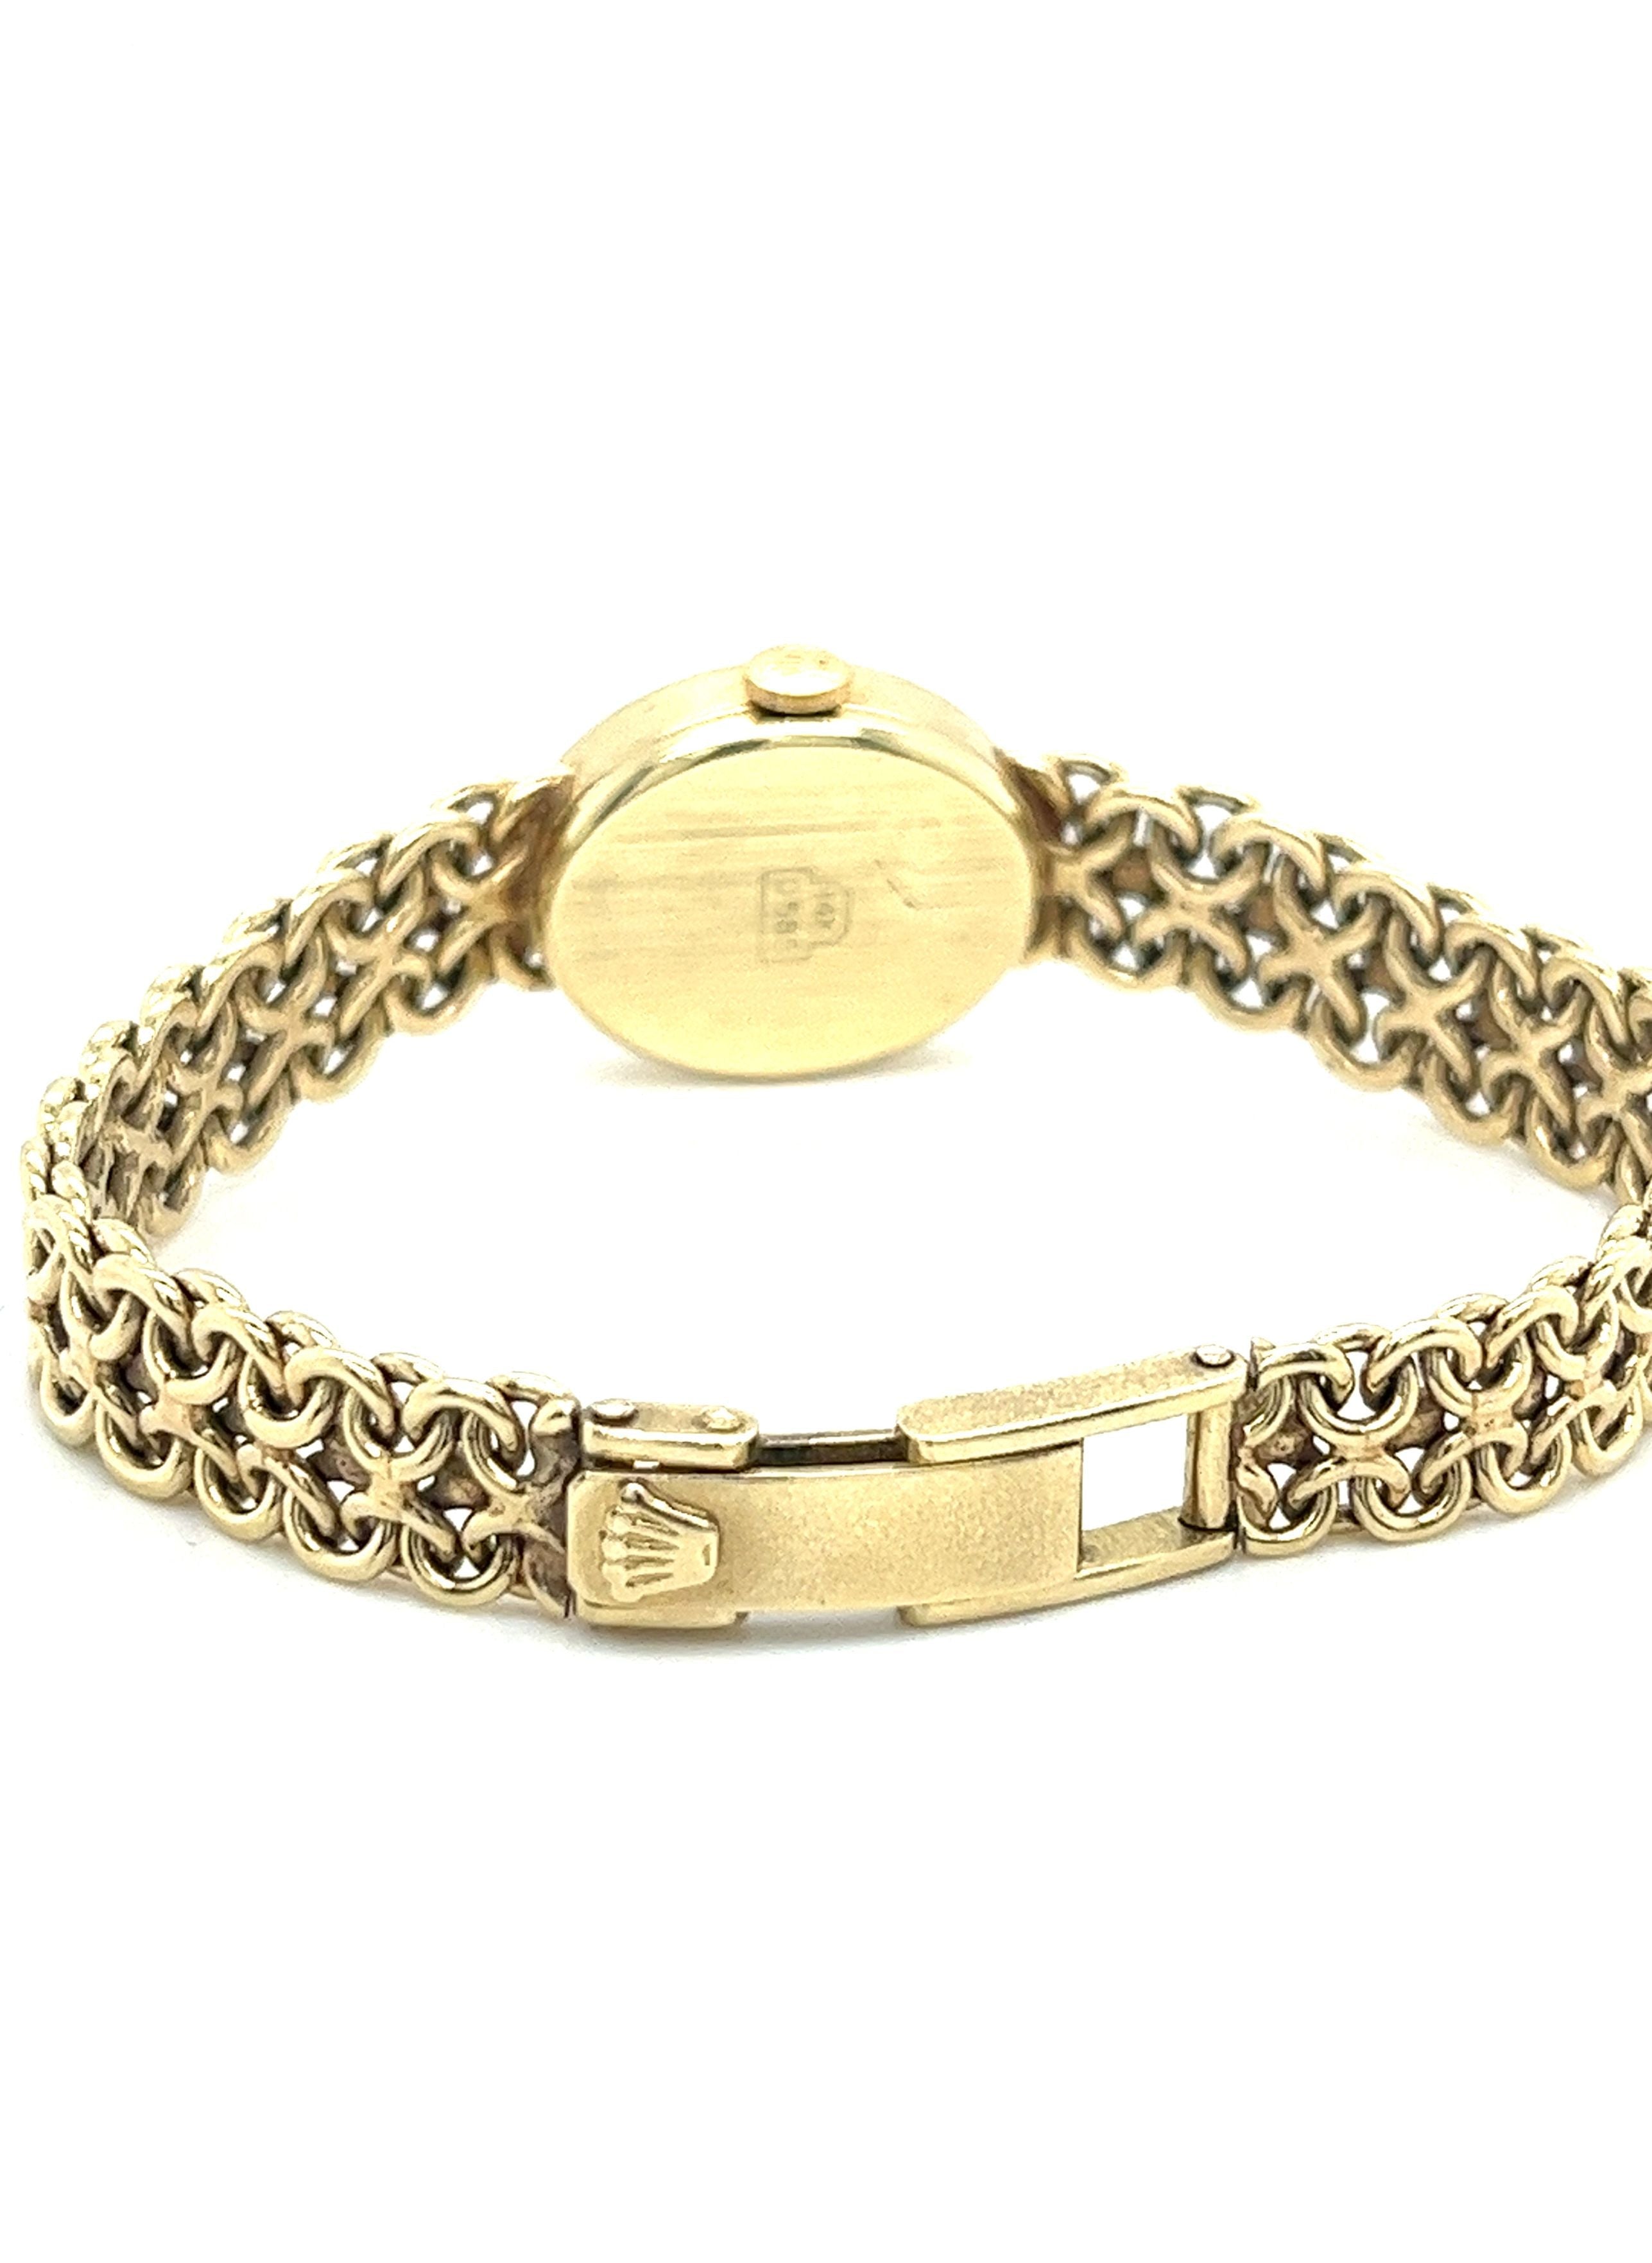 Engraved Bar Milanese Chain Bracelet - Personalized Gold Vermeil Bracelet